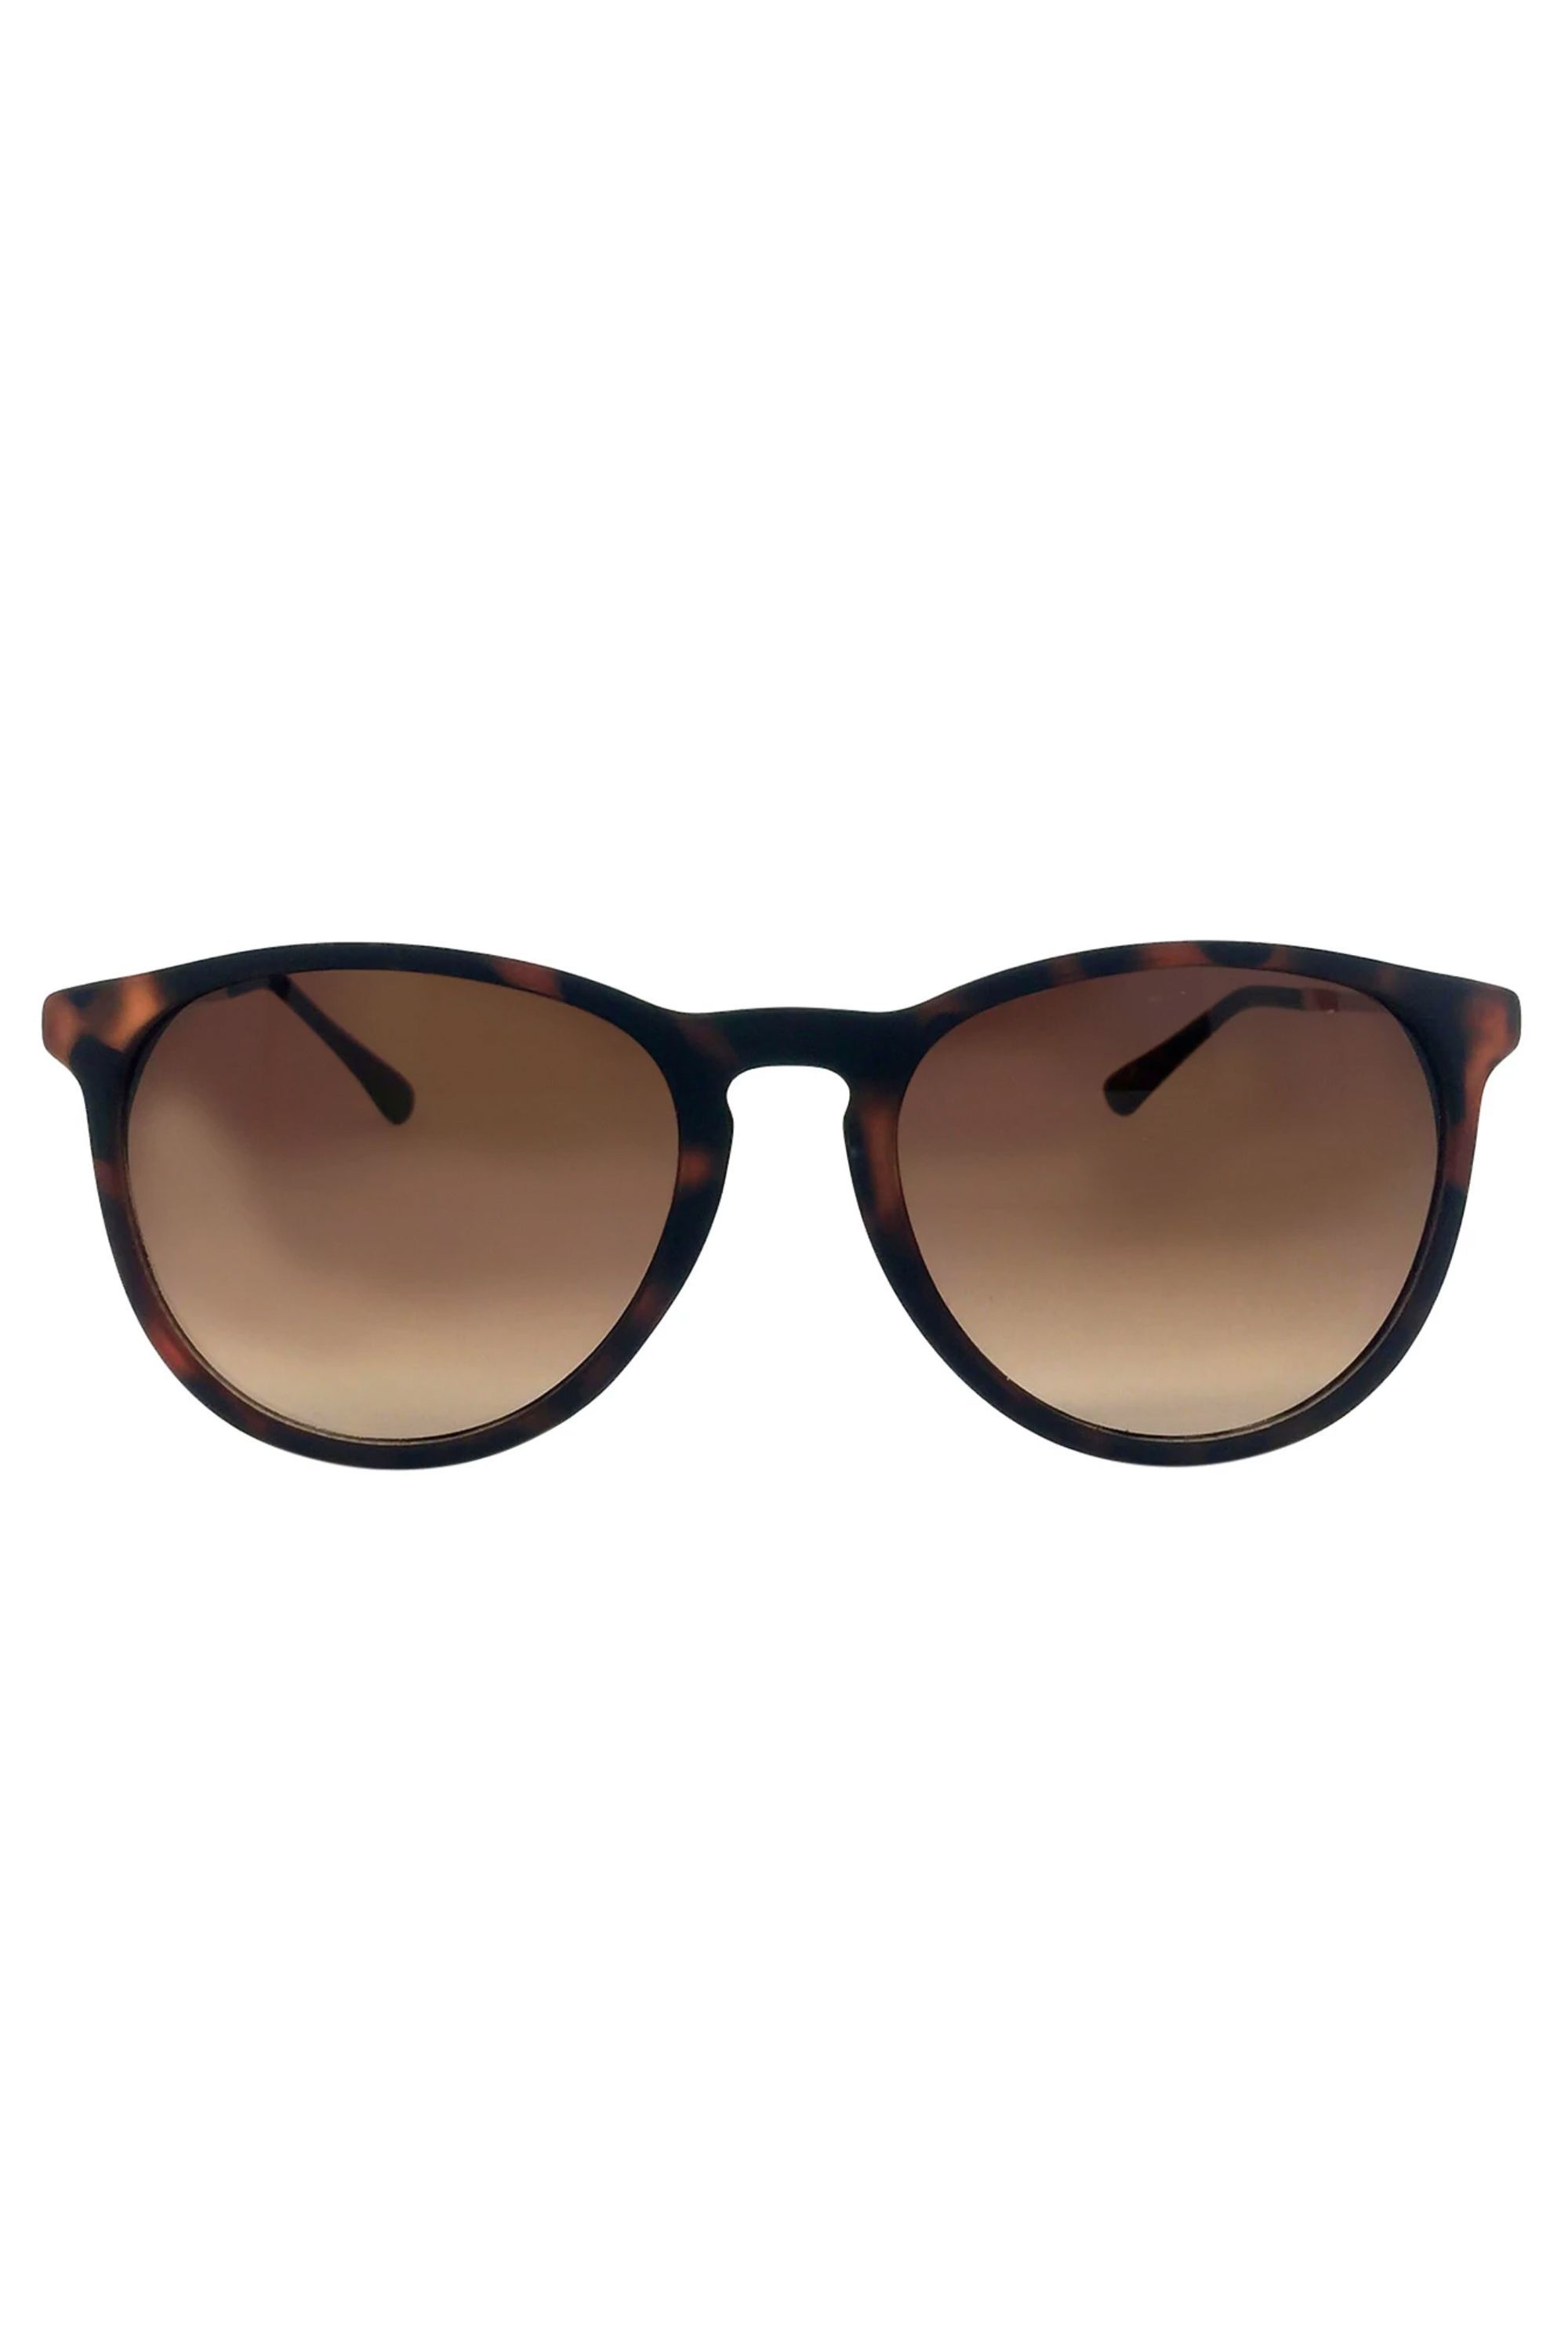 Women Half-Frame Sunglasses Wooden Sunglasses Summer Style Beach Eyewear 